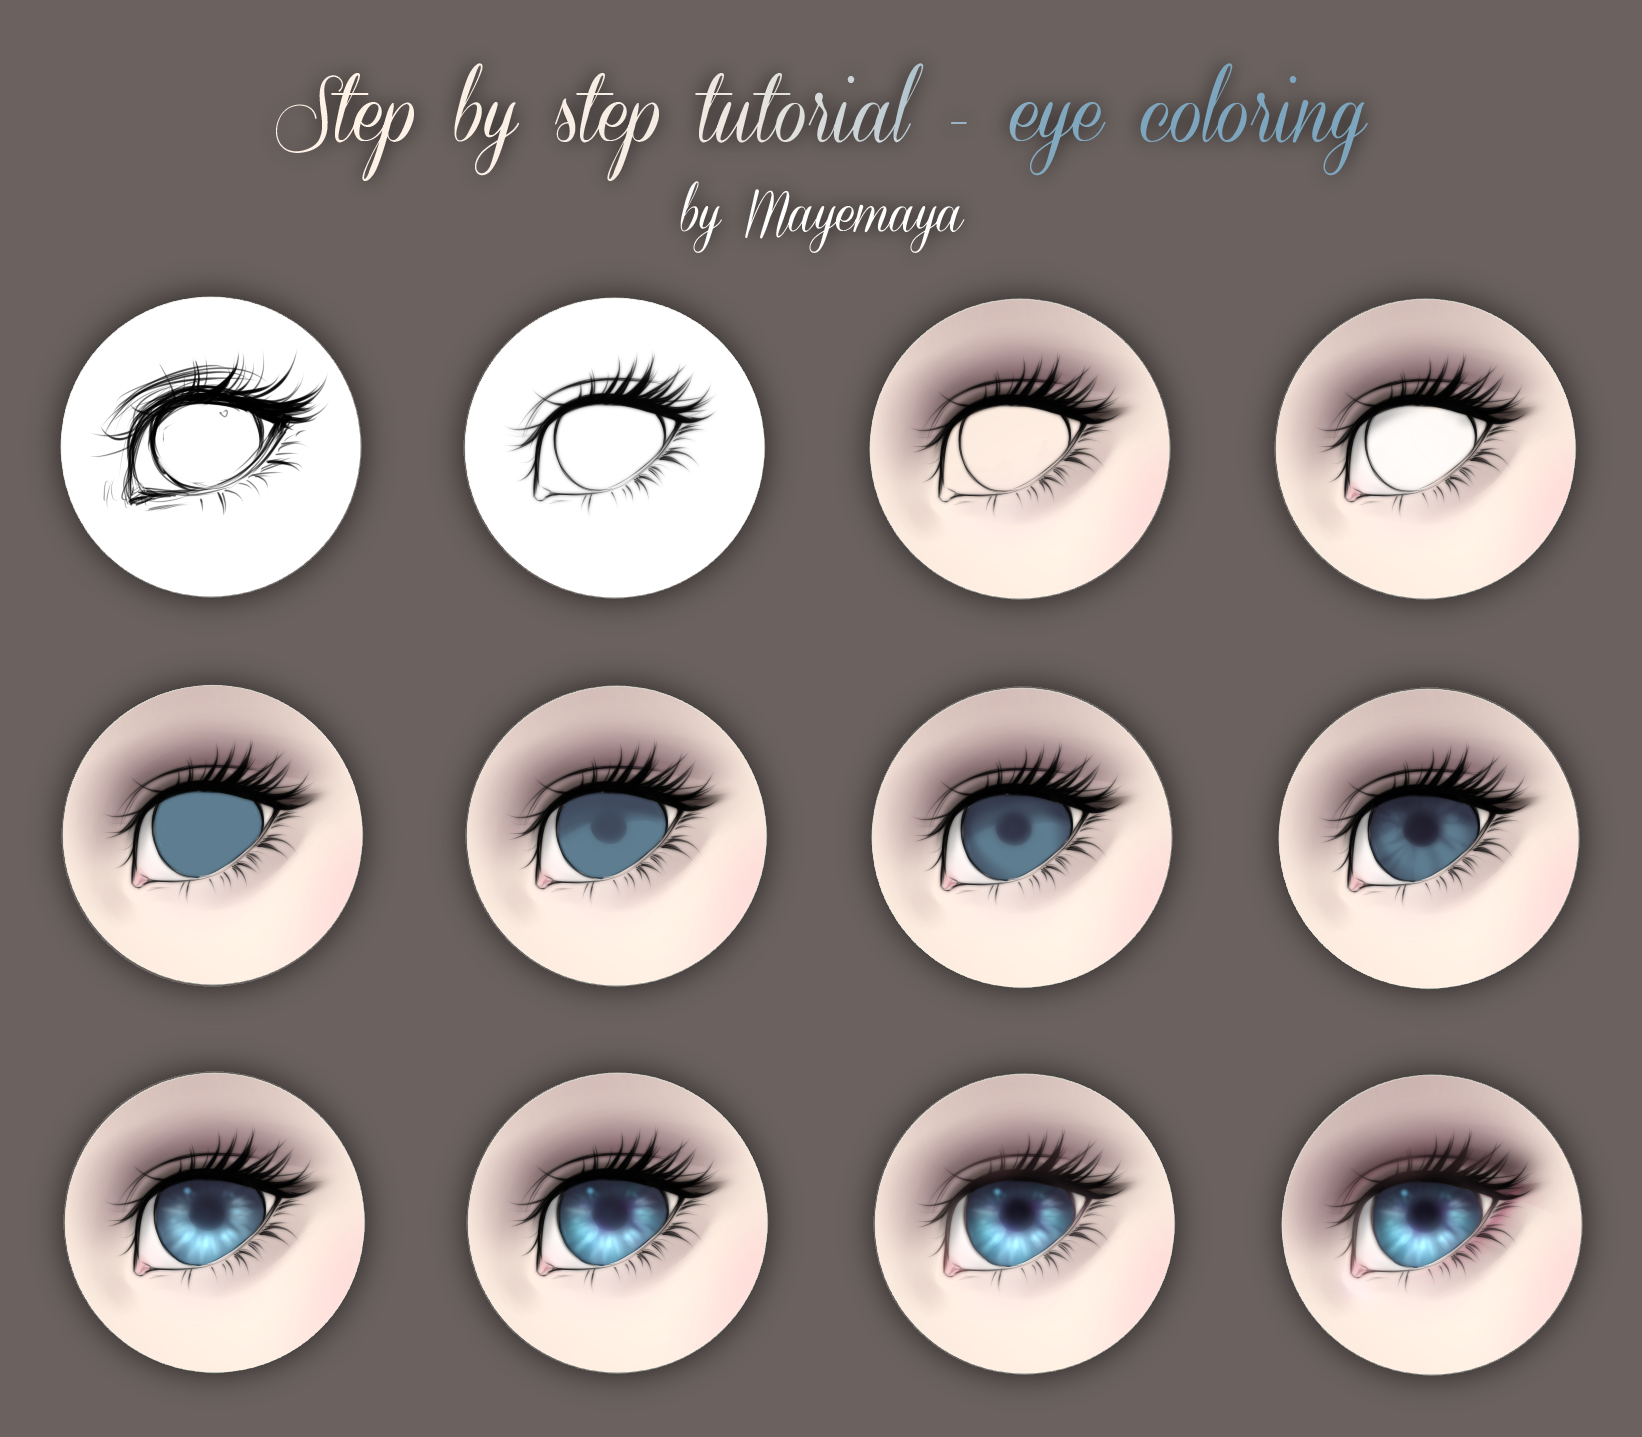 Step by step tutorial - eye coloring by MayeMaya on DeviantArt